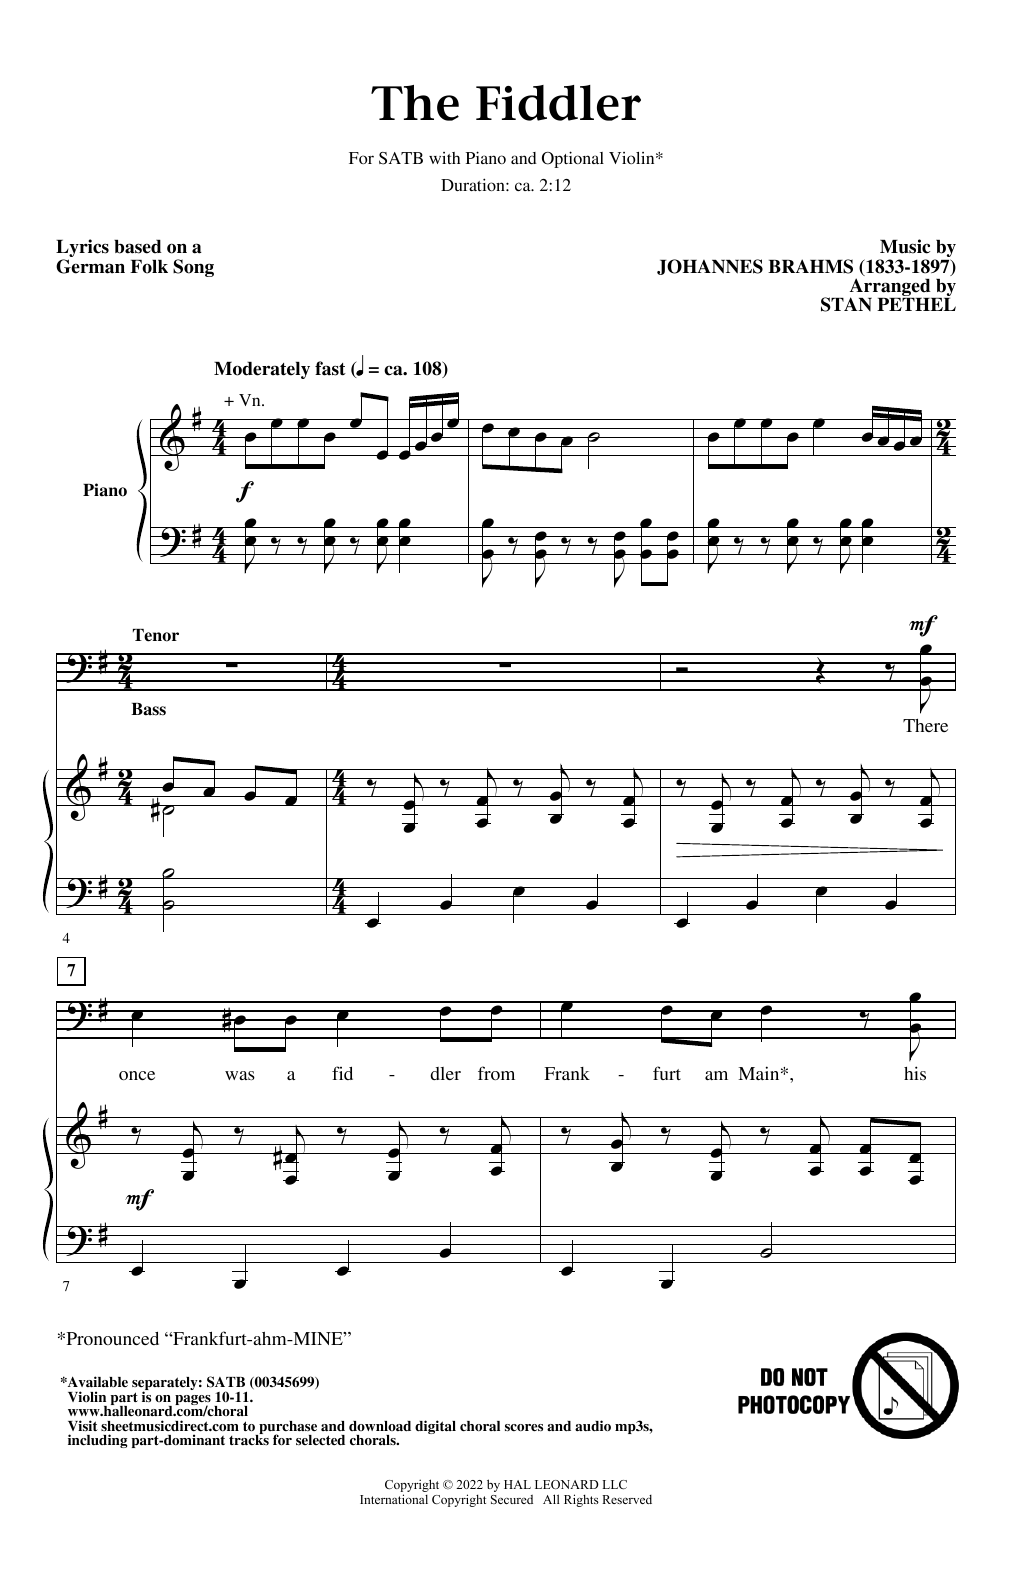 Johannes Brahms The Fiddler (arr. Stan Pethel) Sheet Music Notes & Chords for SATB Choir - Download or Print PDF